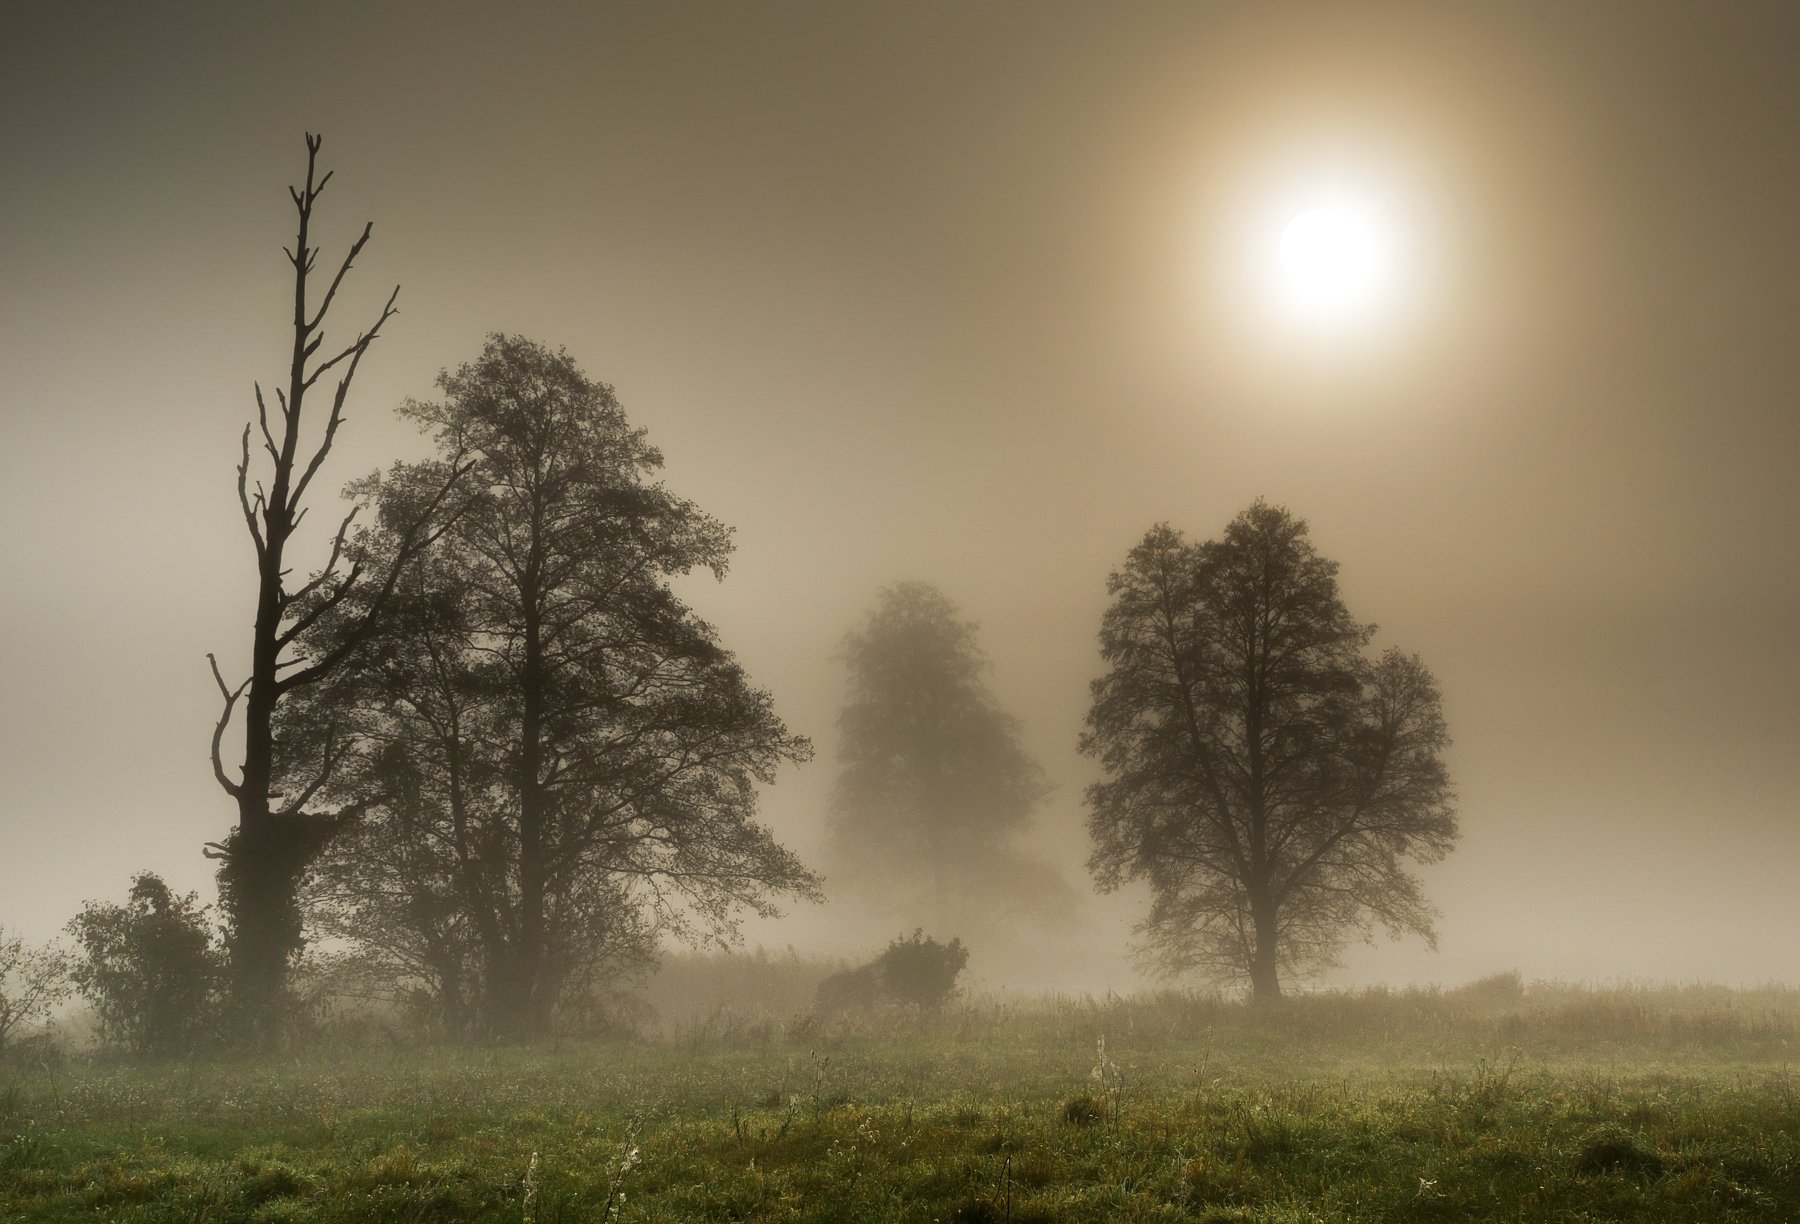 Fog,Mist,Nature,River,Gwda,Sun,Sky,Landscape,Nikon,Trees,Dawn,Summer,Light, Krzysztof Tollas